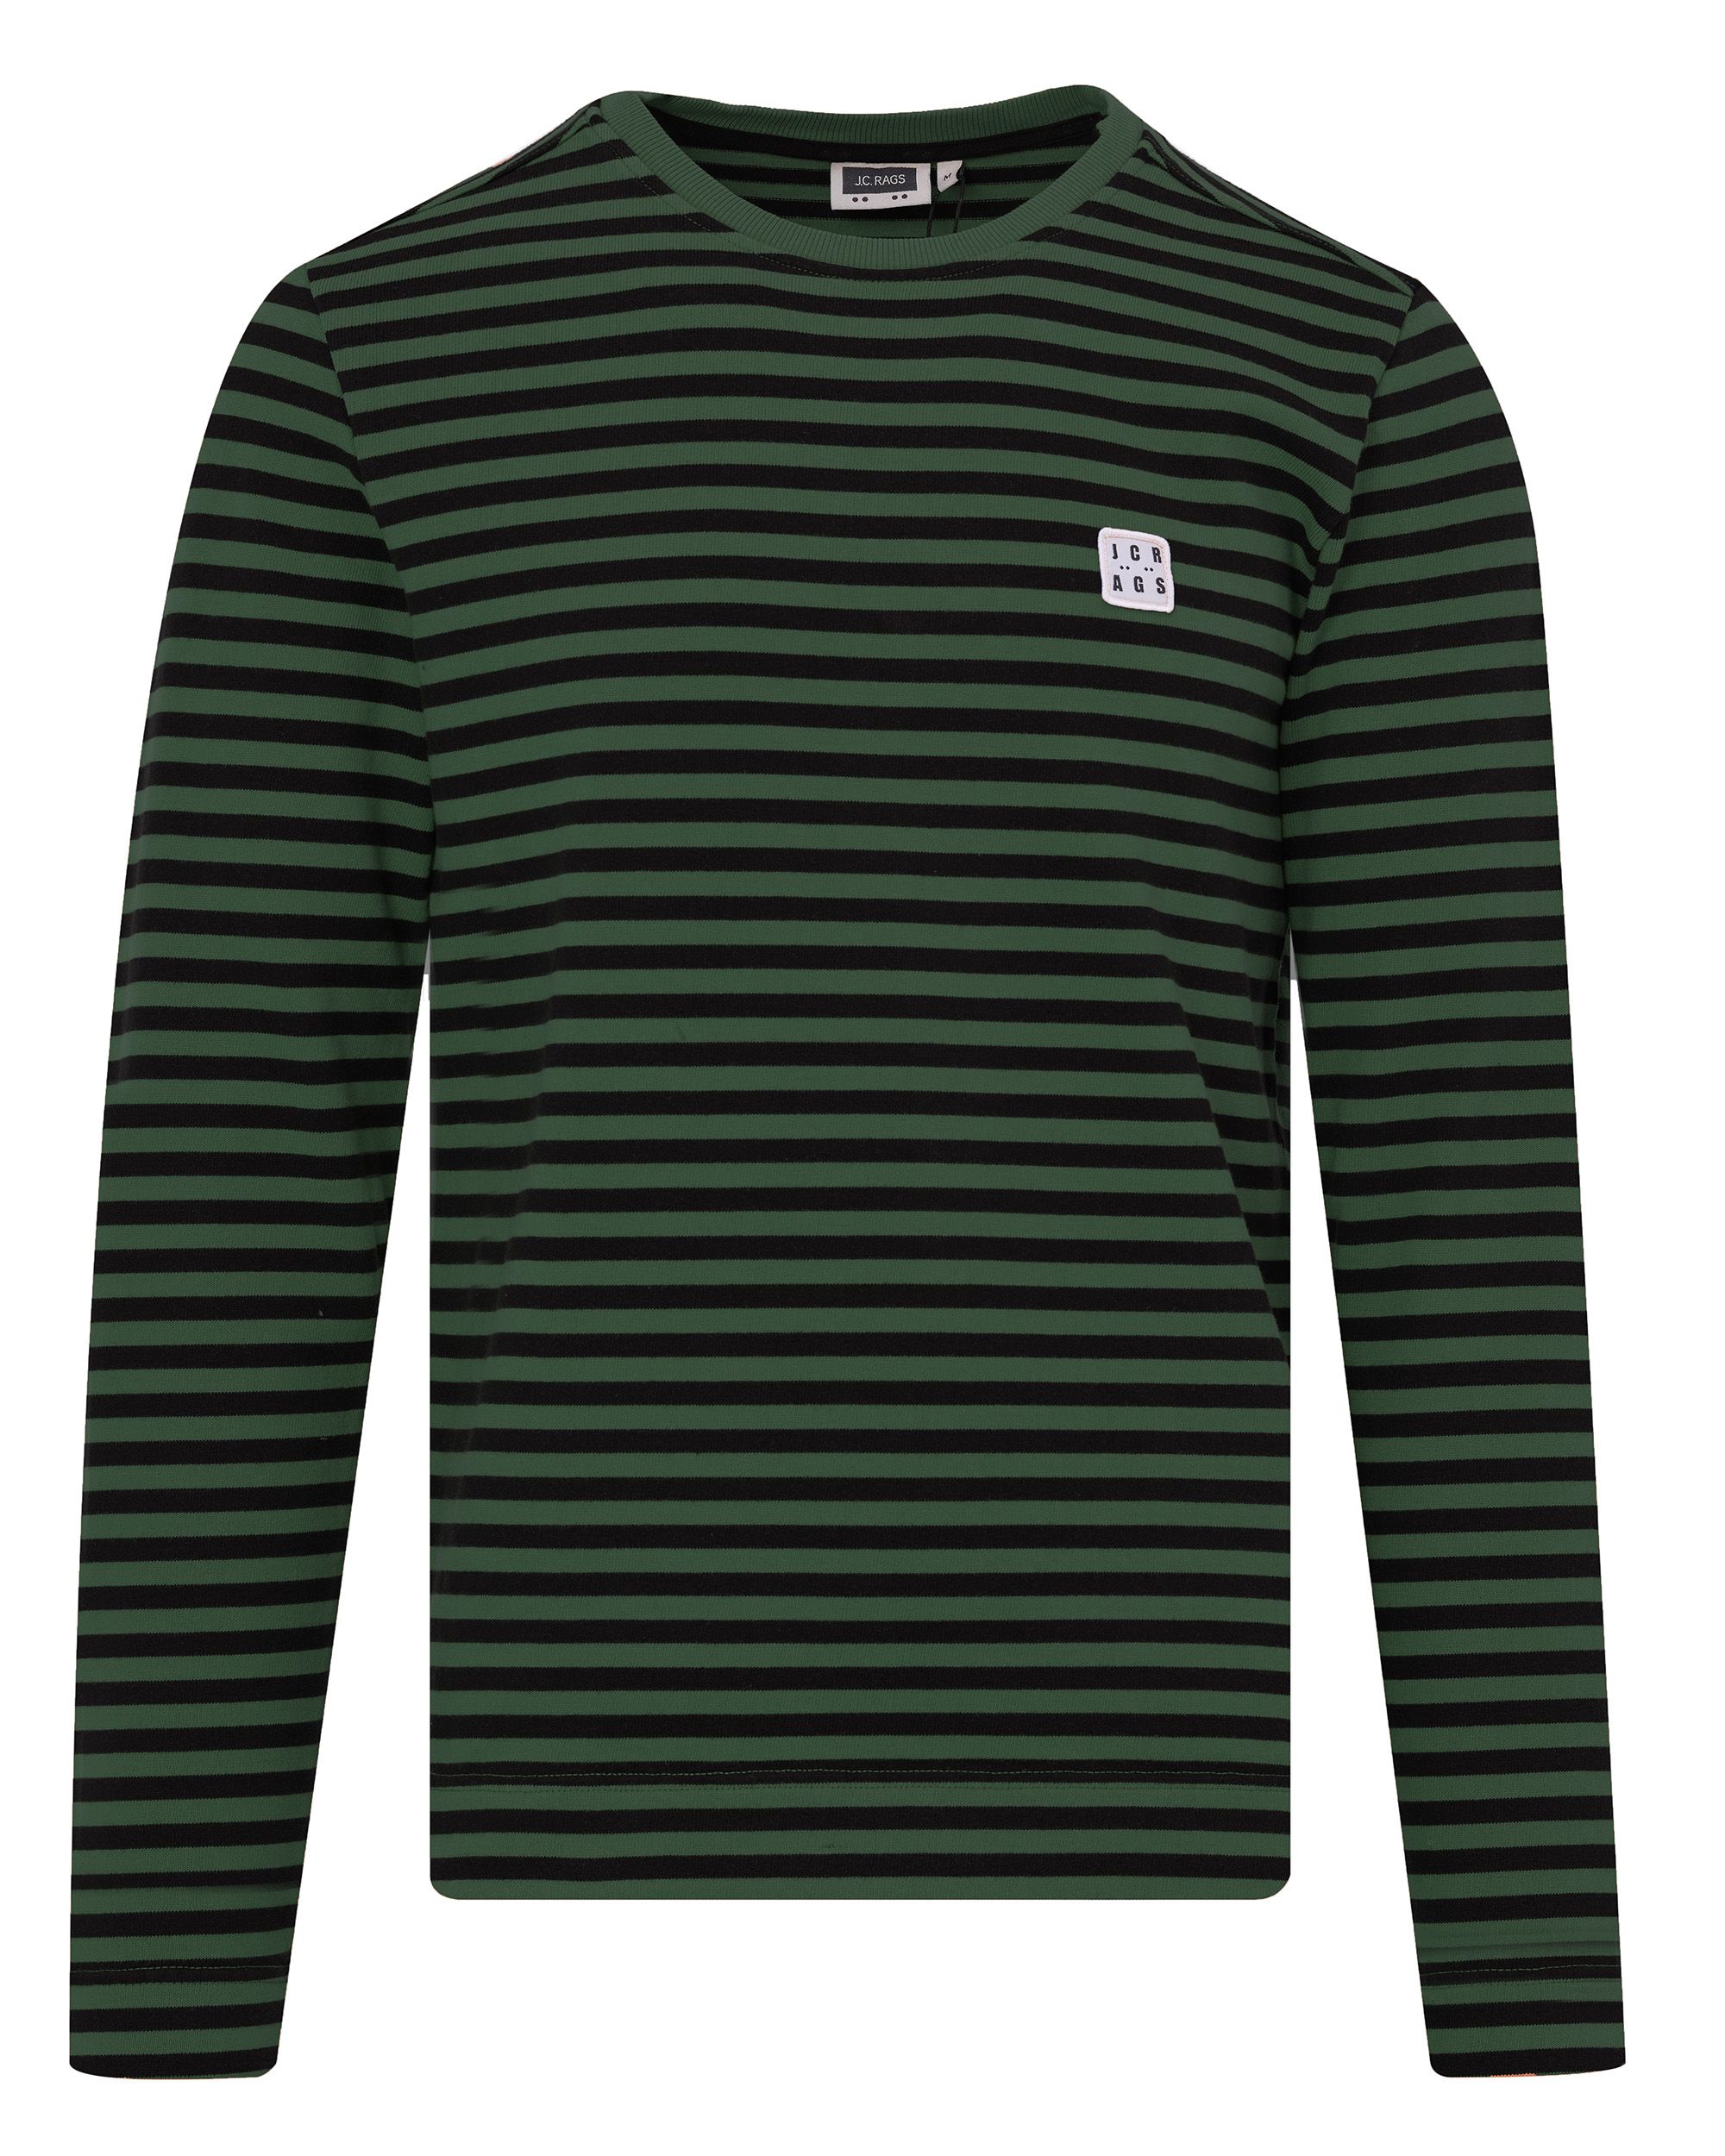 J.C. RAGS T shirt LM Green stripe 084534-005-L